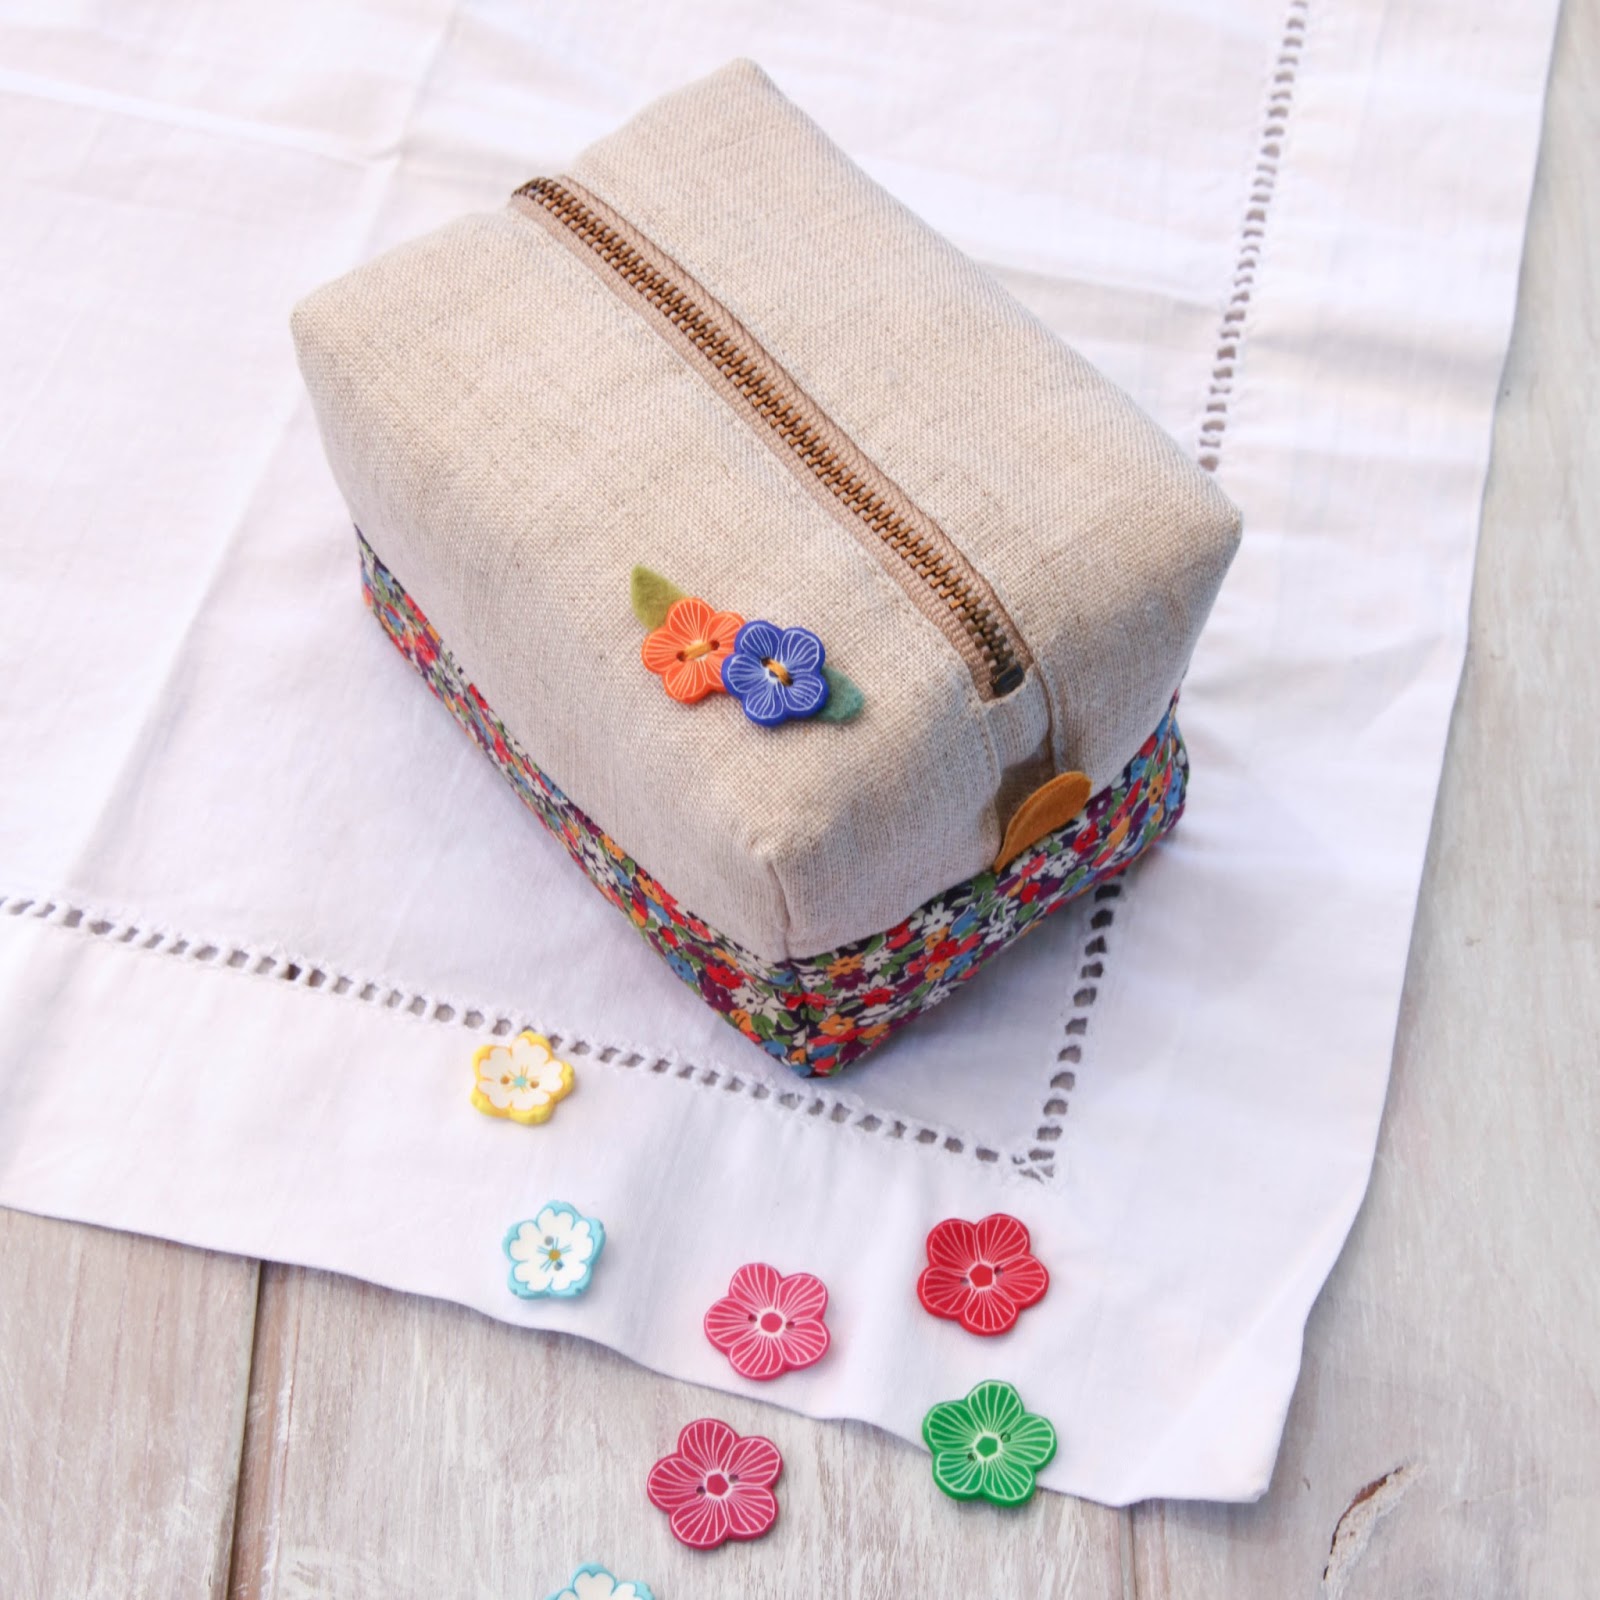 How to make cute block zipper pouch / handbag. DIY photo tutorial and template pattern.